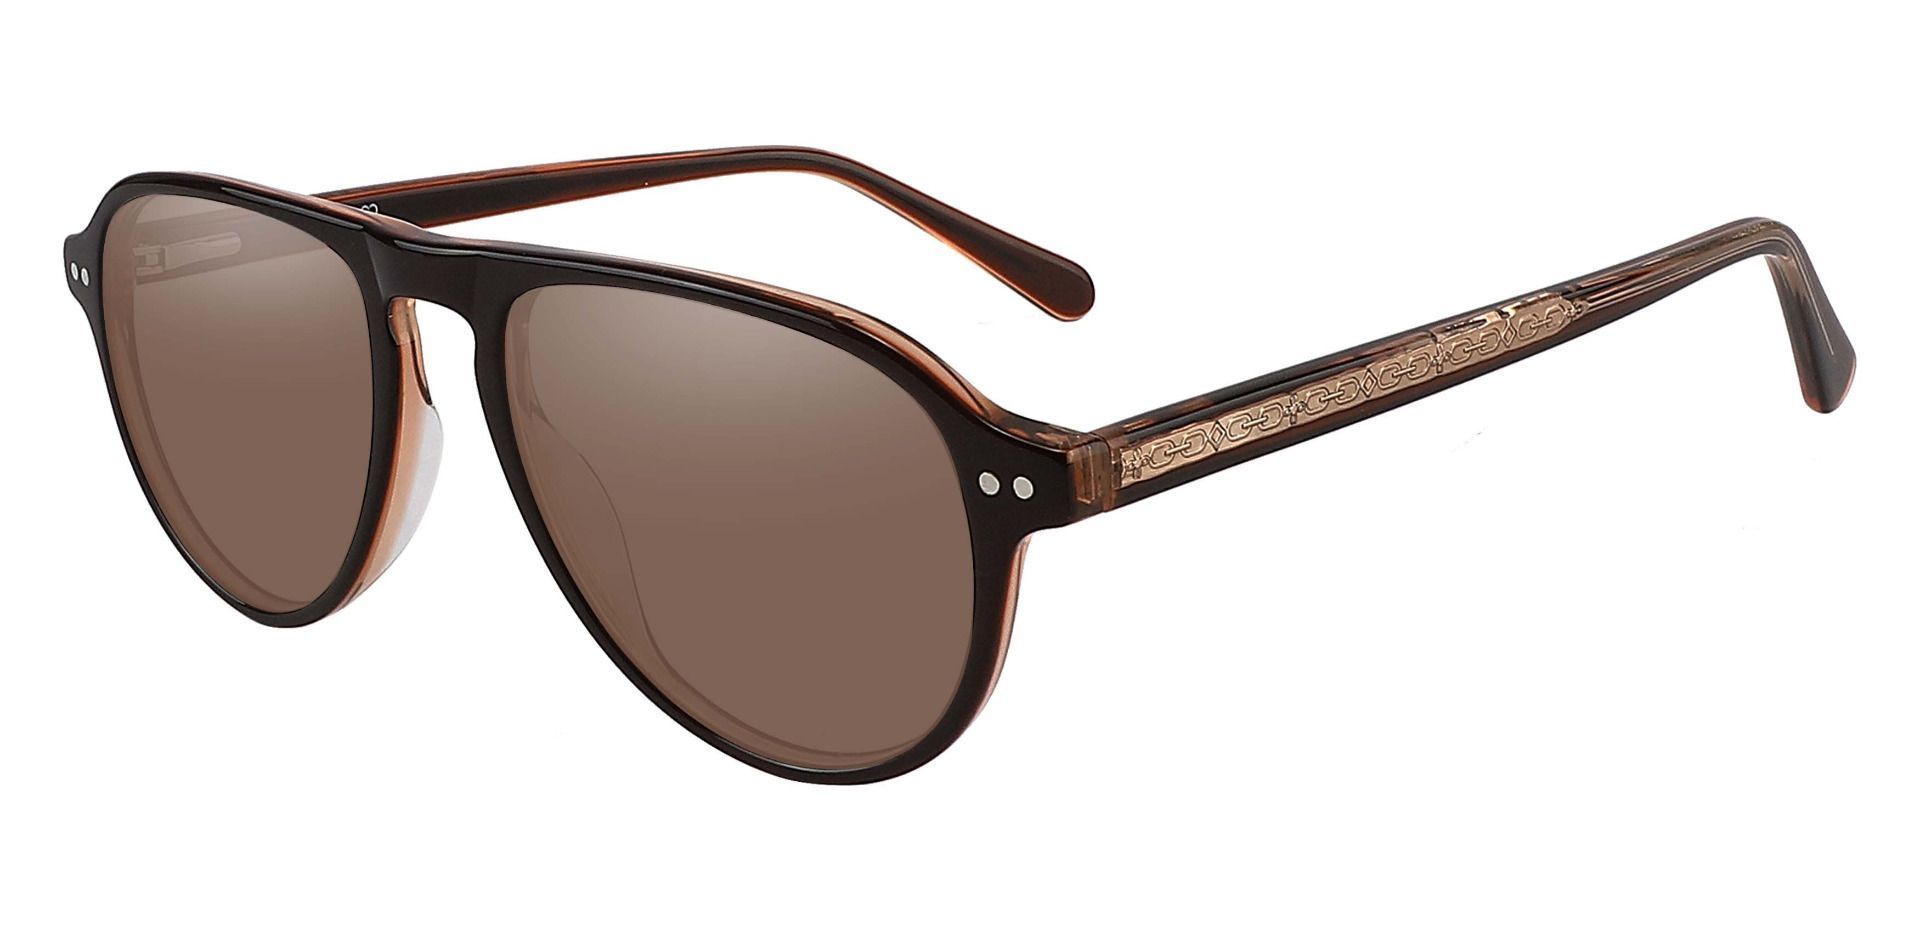 Durham Aviator Progressive Sunglasses - Brown Frame With Brown Lenses